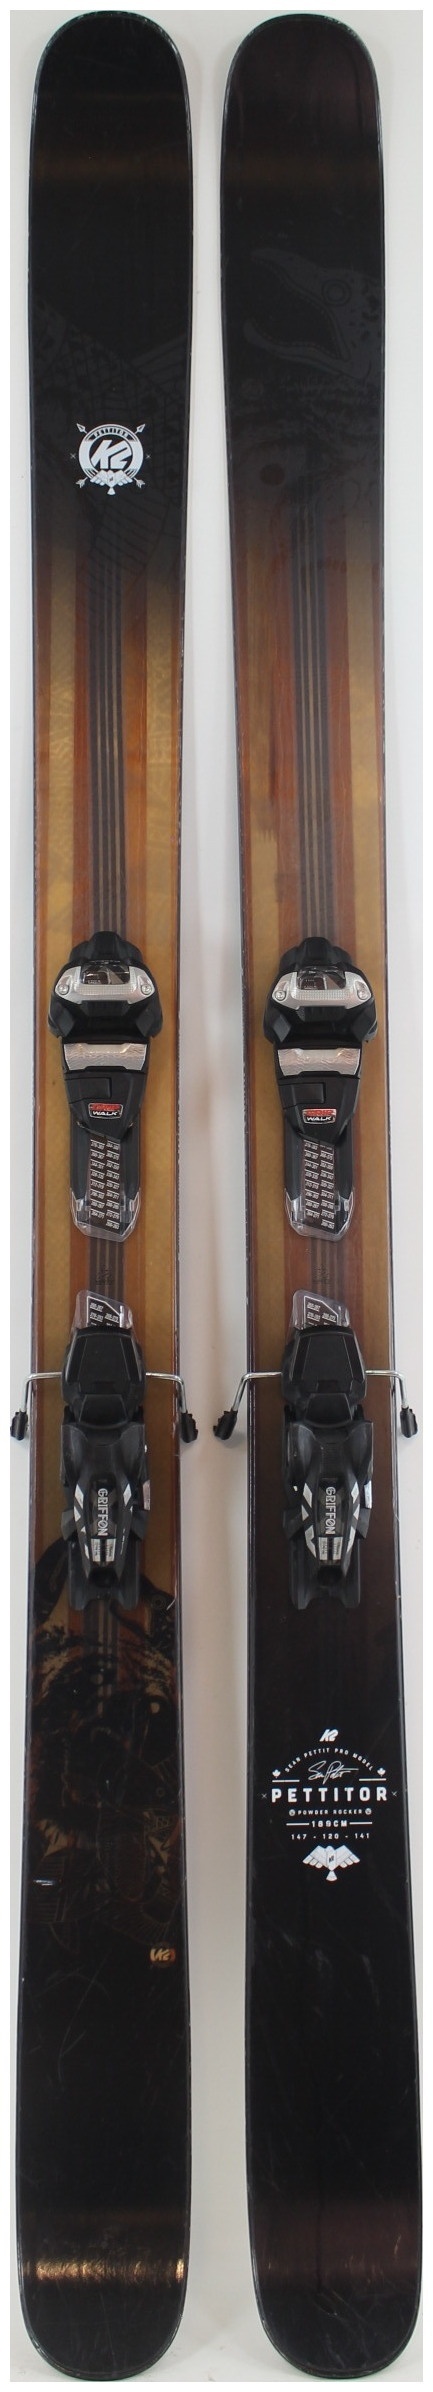 2017, K2, Shreditor 120 Pettitor Skis with Marker Griffon Demo Bindings  Used Demo Skis 189cm